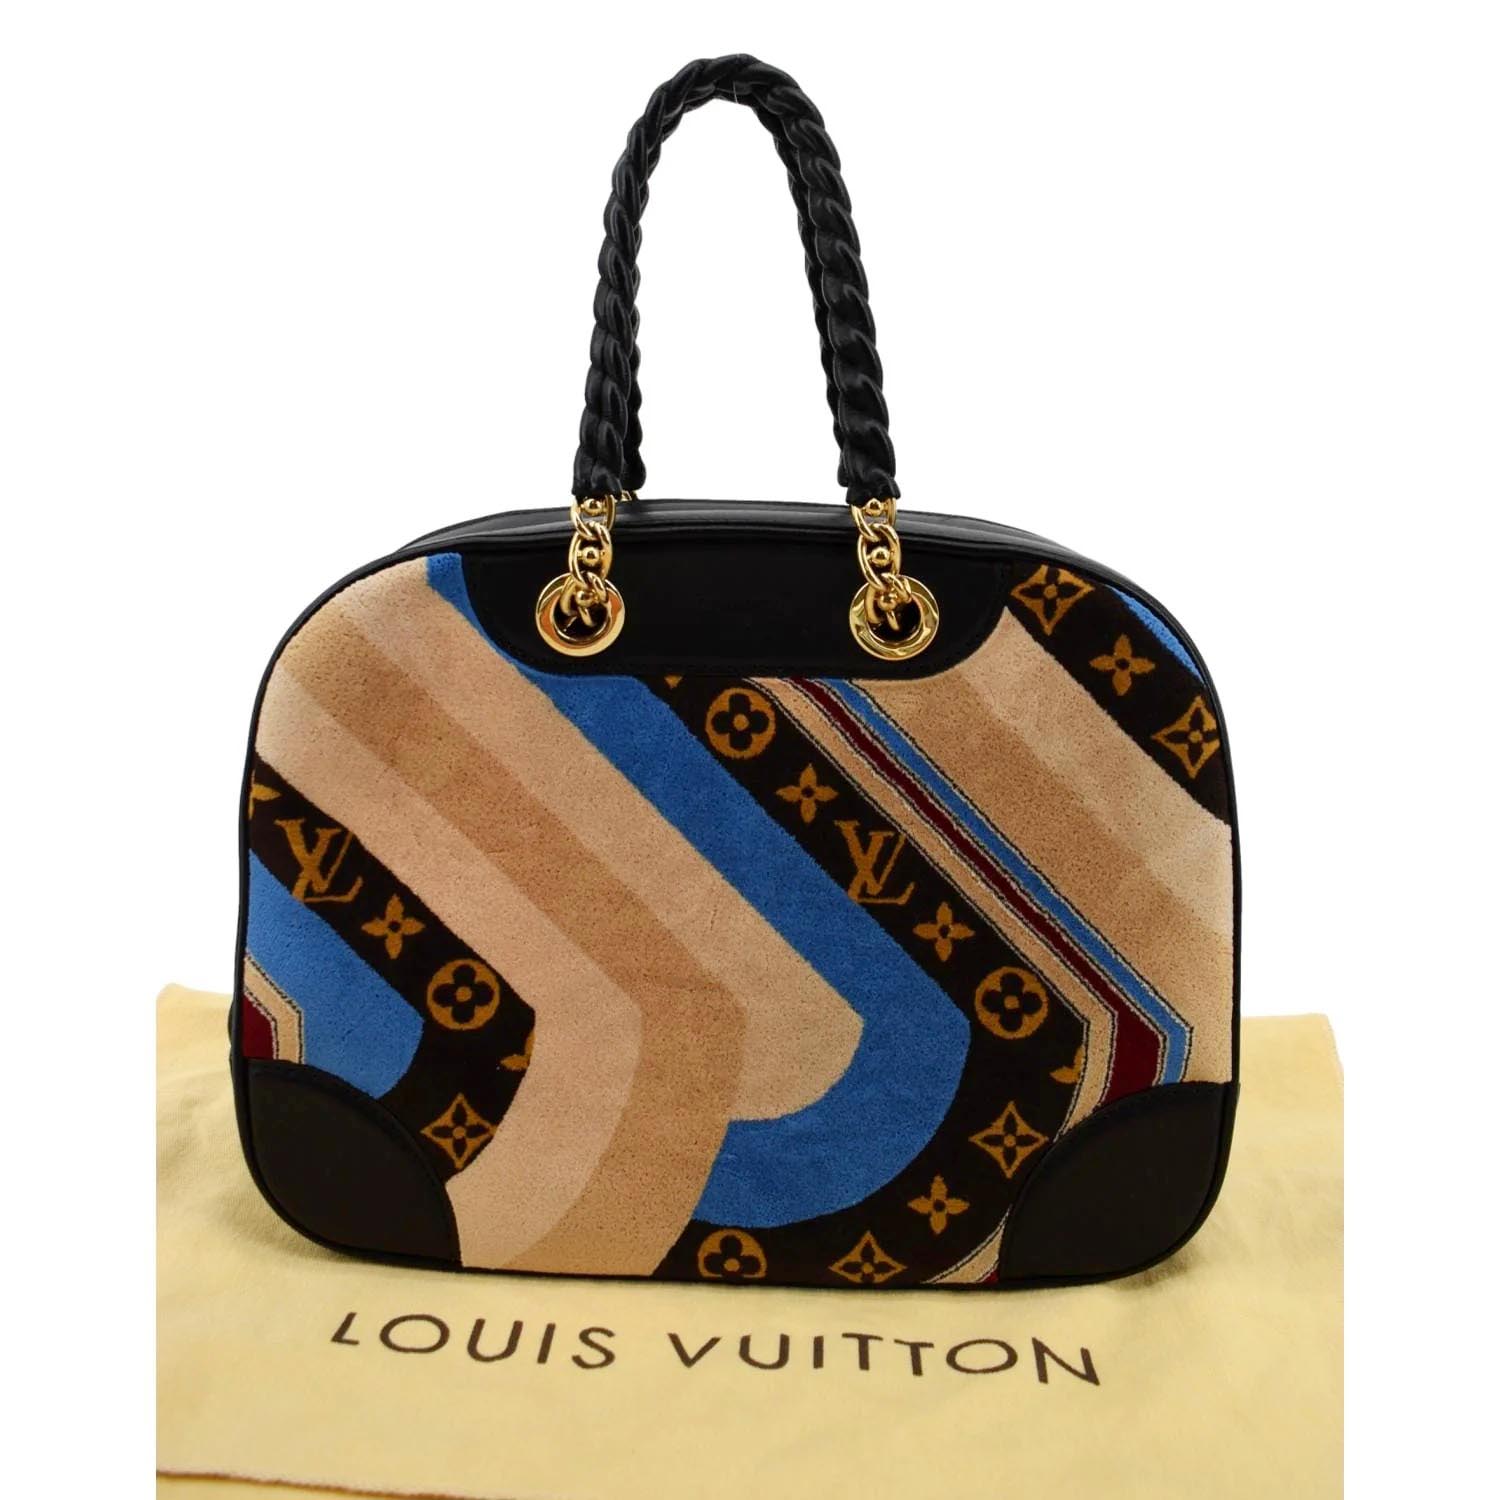 Louis Vuitton Fabric, Gucci Fabric, Dior Fabric, Fendi Fabric, MCM